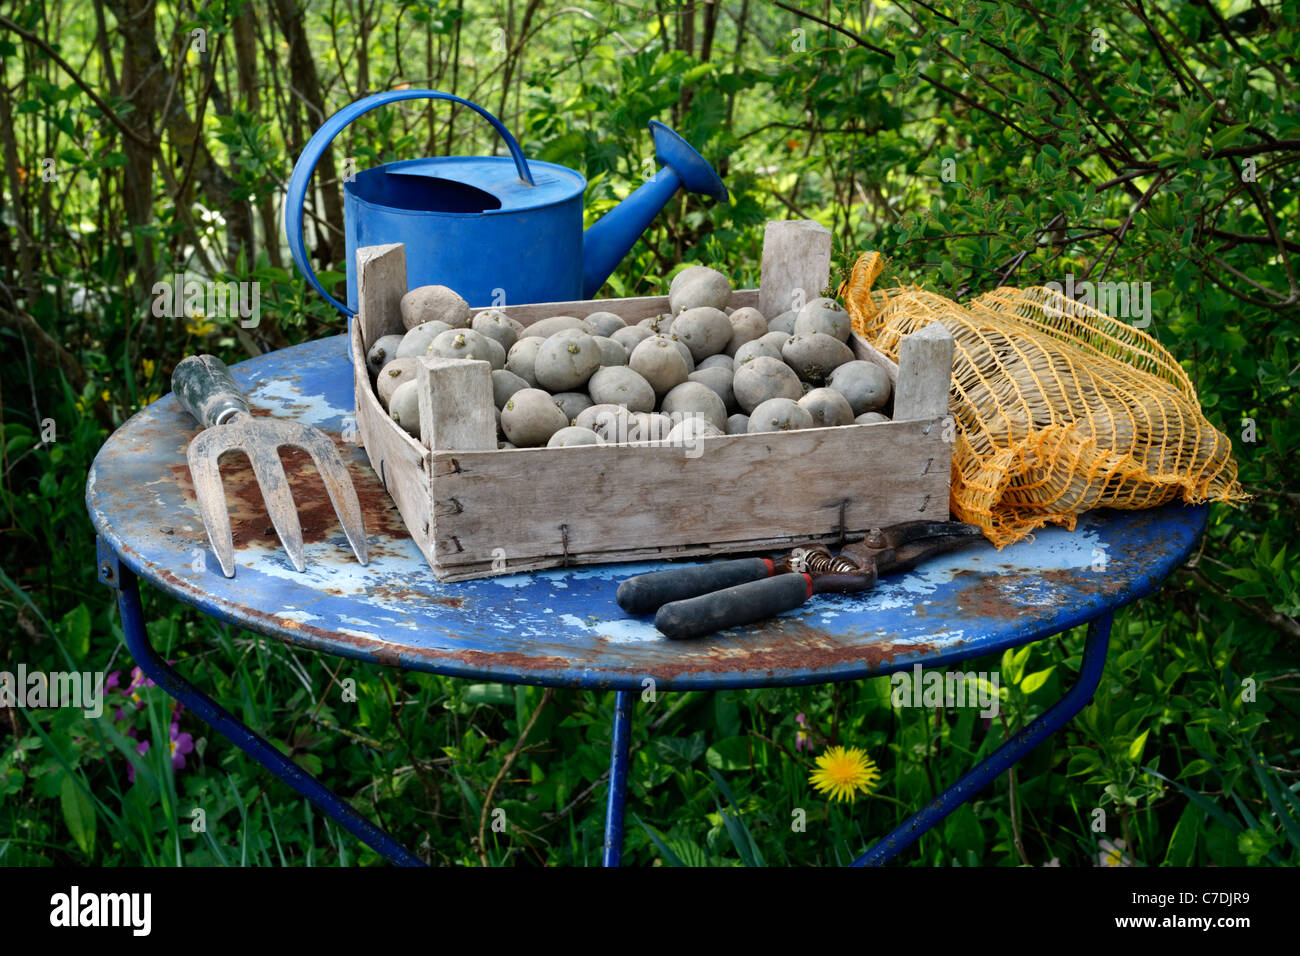 Potatoes (Solanum tuberosum) to be planted on the garden table. Stock Photo